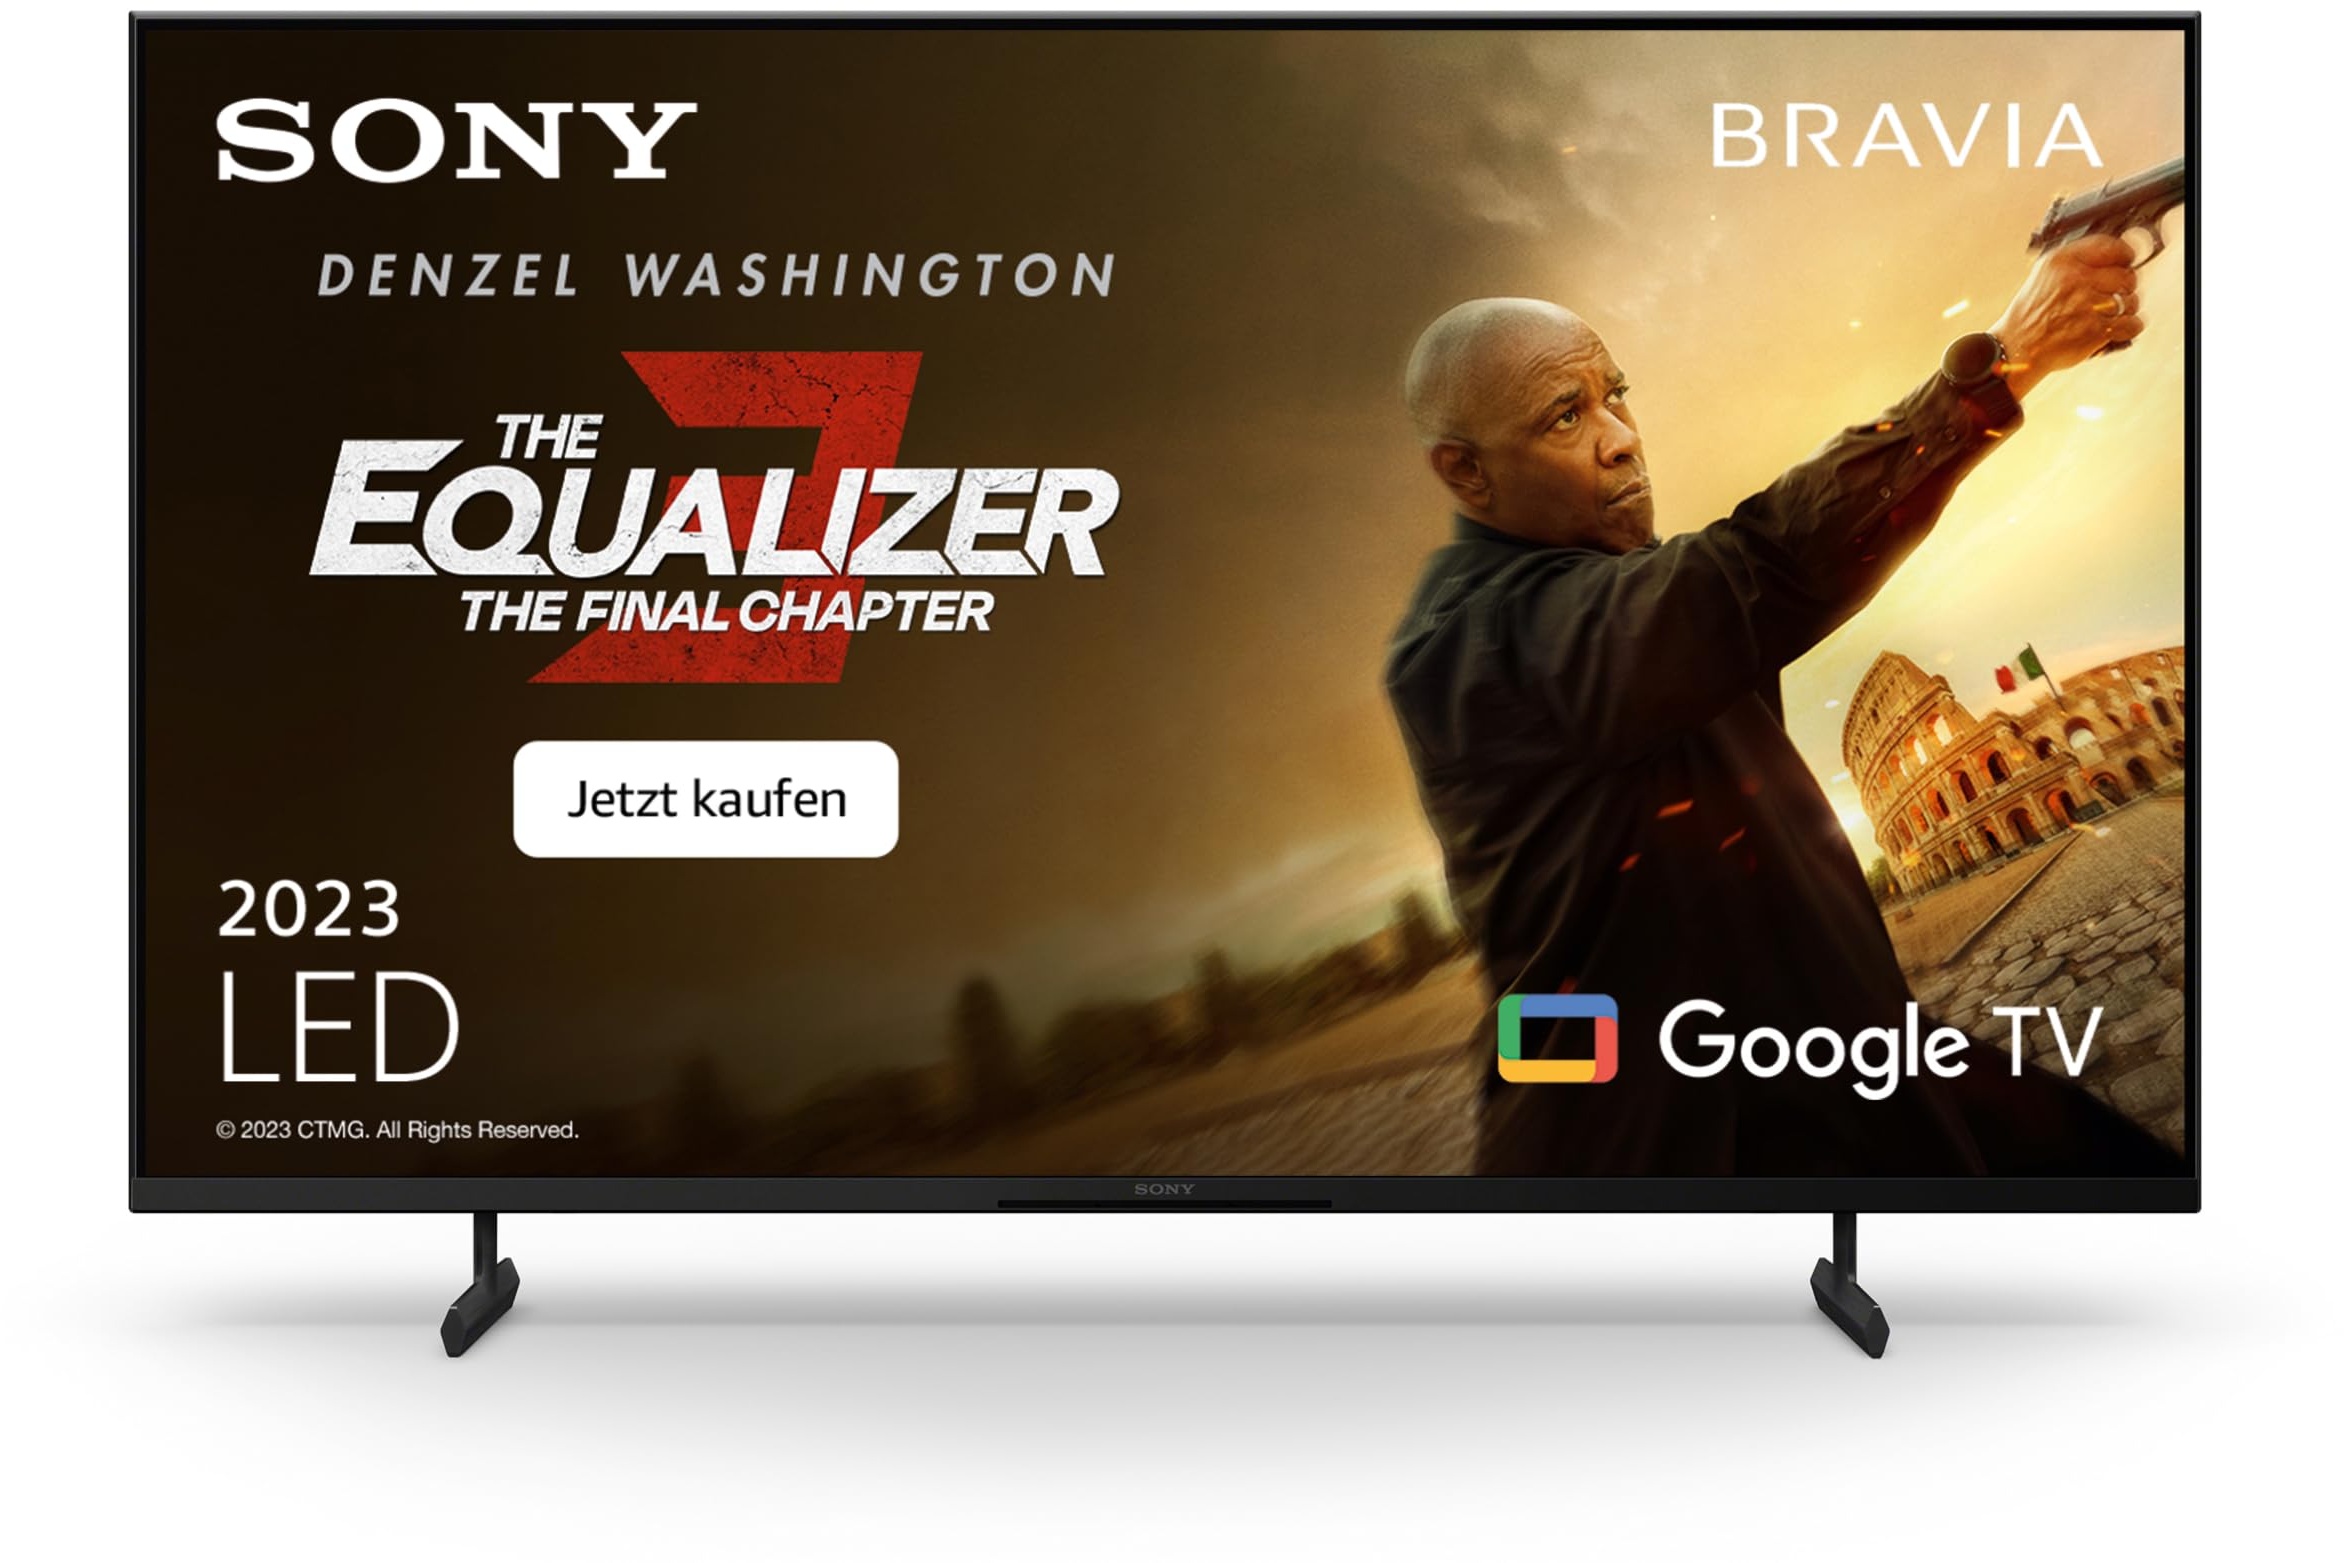 Sony BRAVIA, KD-55X80L, 55 Zoll Fernseher, LED, 4K HDR, Google TV, Smart TV, Works with Alexa, BRAVIA CORE, TRILUMINOS PRO, HDMI 2.1, Gaming-Menü mit ALLM